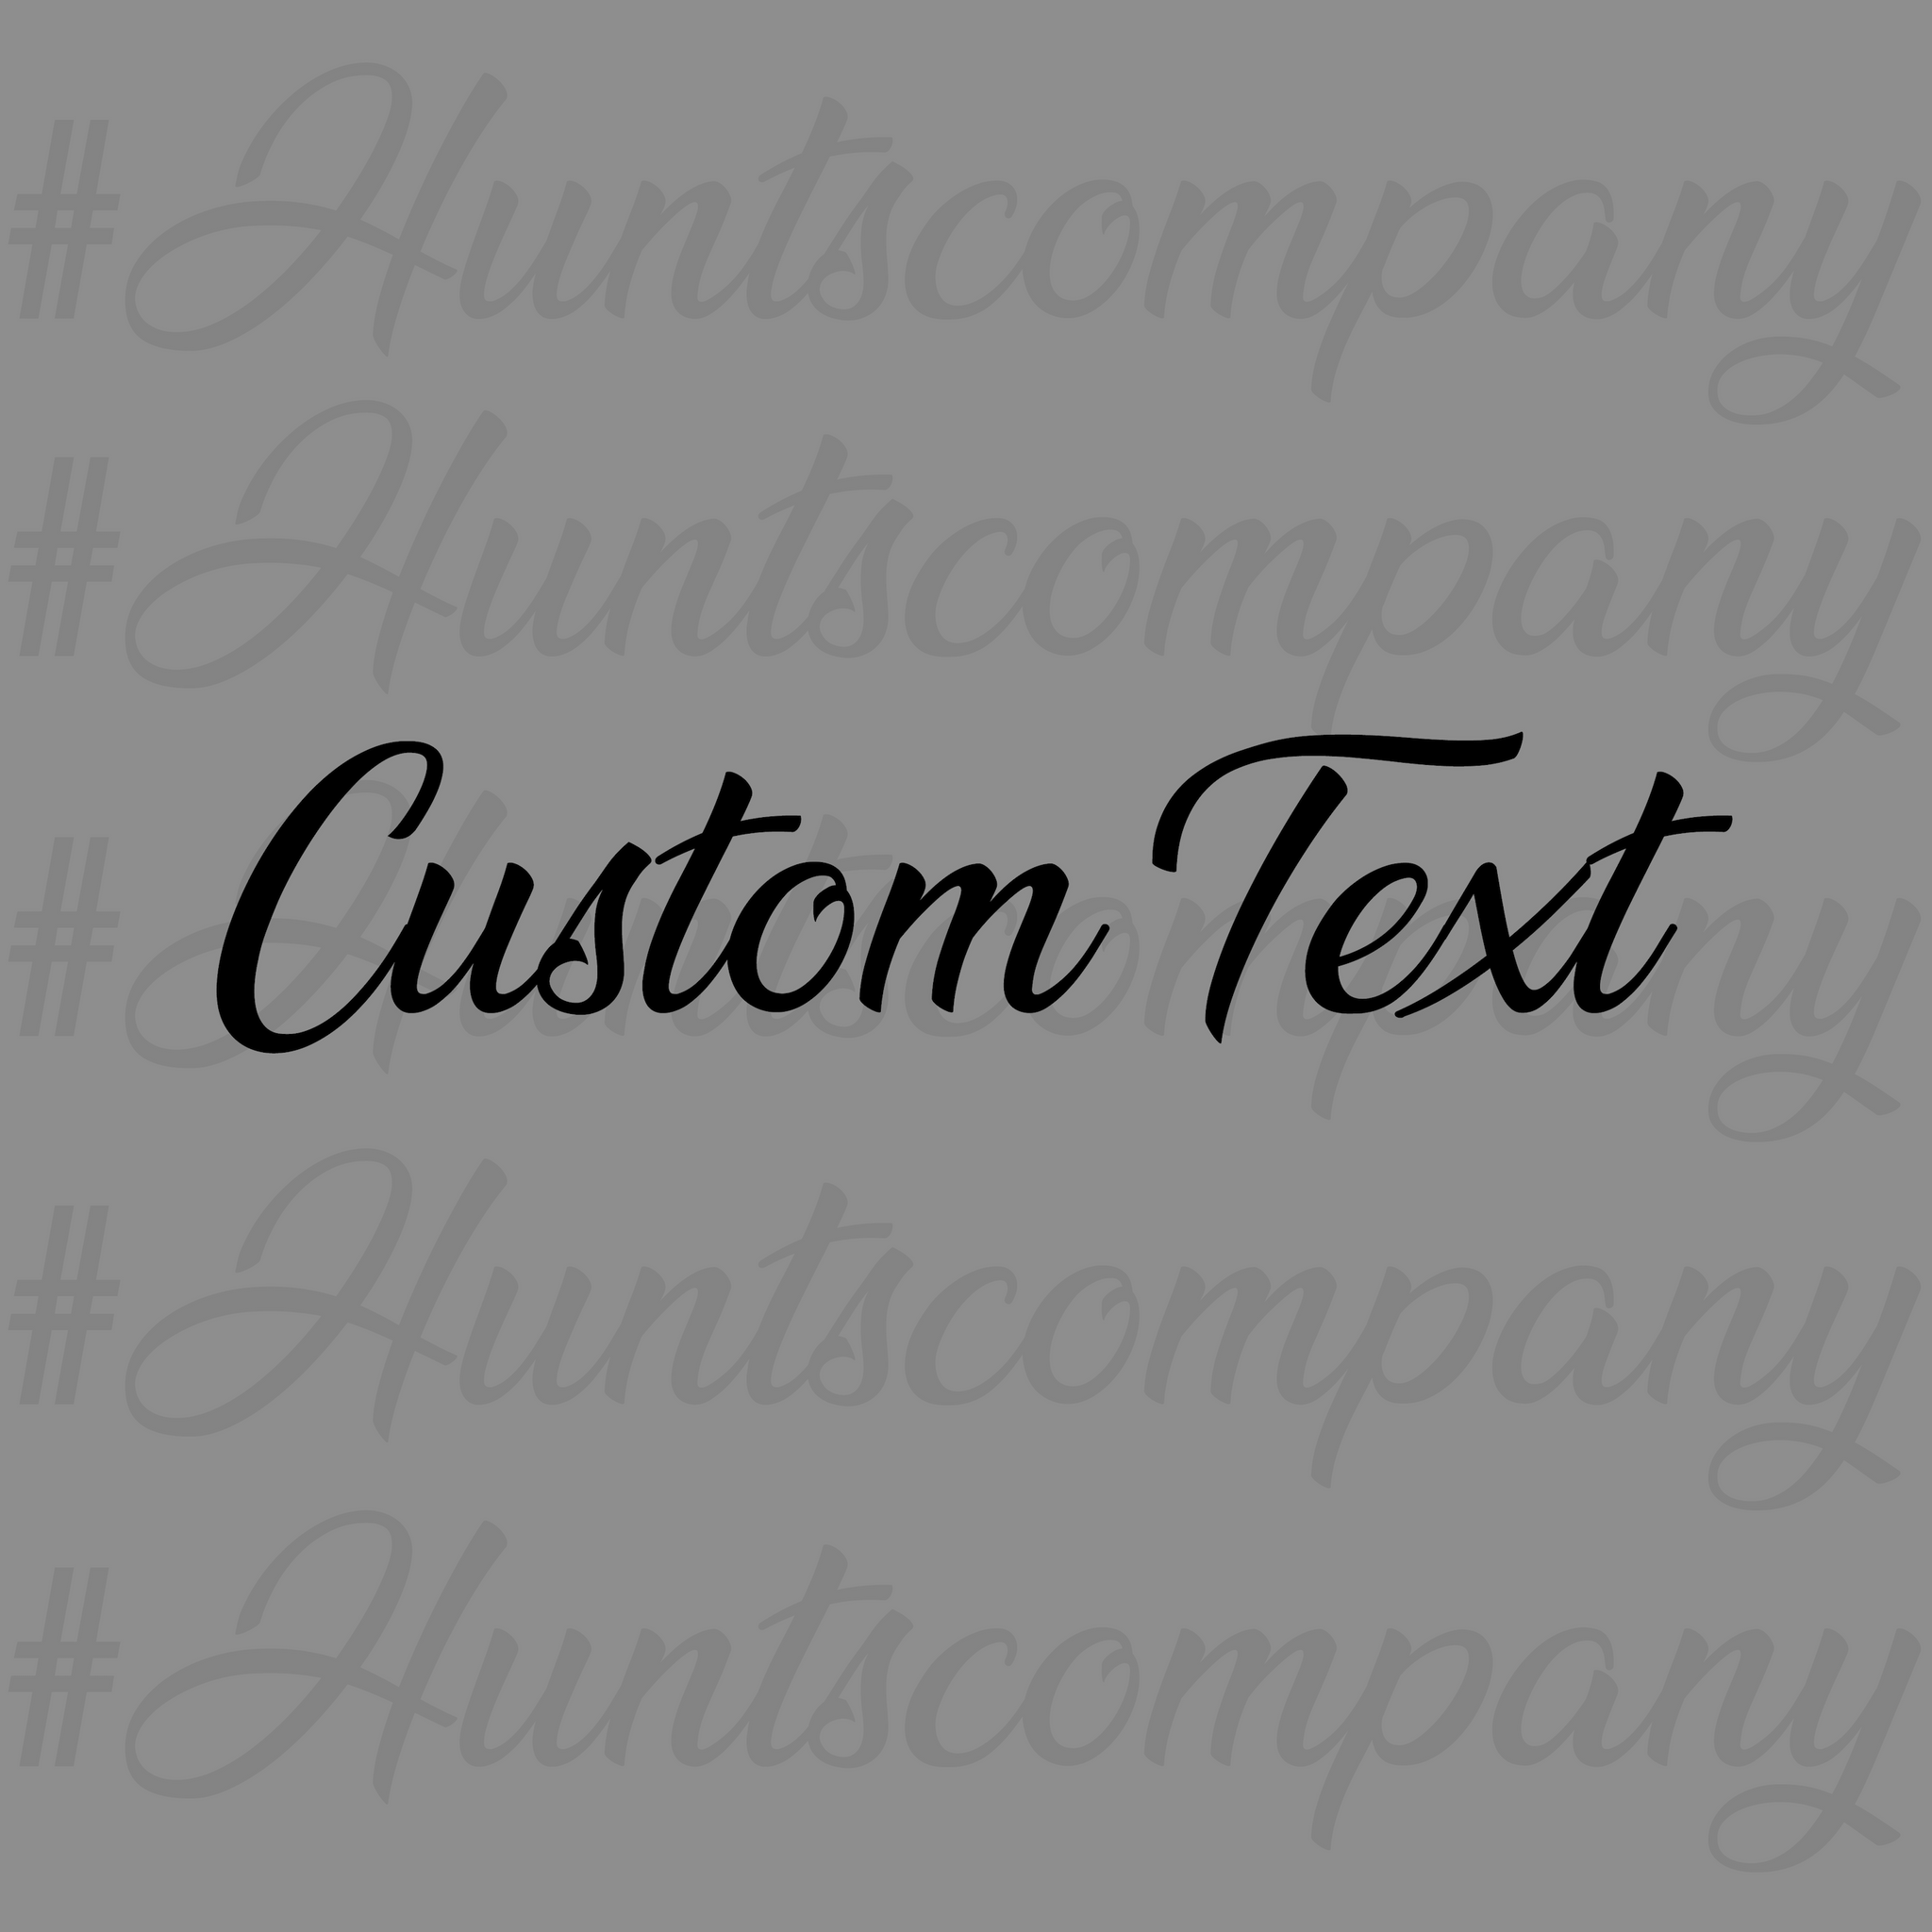 Custom Text Vinyl Decal